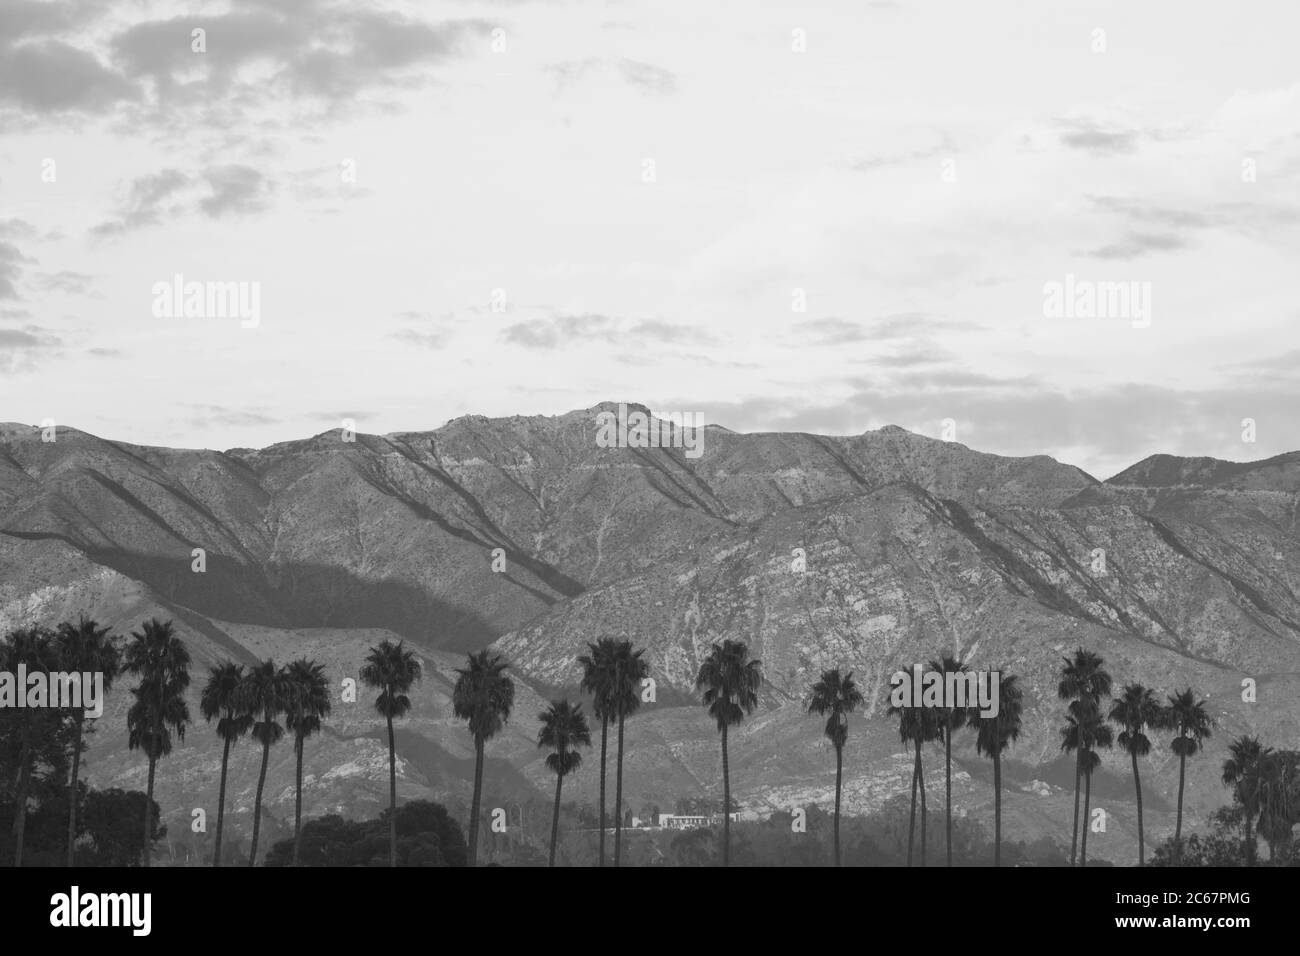 Scenic mountainous landscape with palm trees, Santa Barbara, California, USA Stock Photo